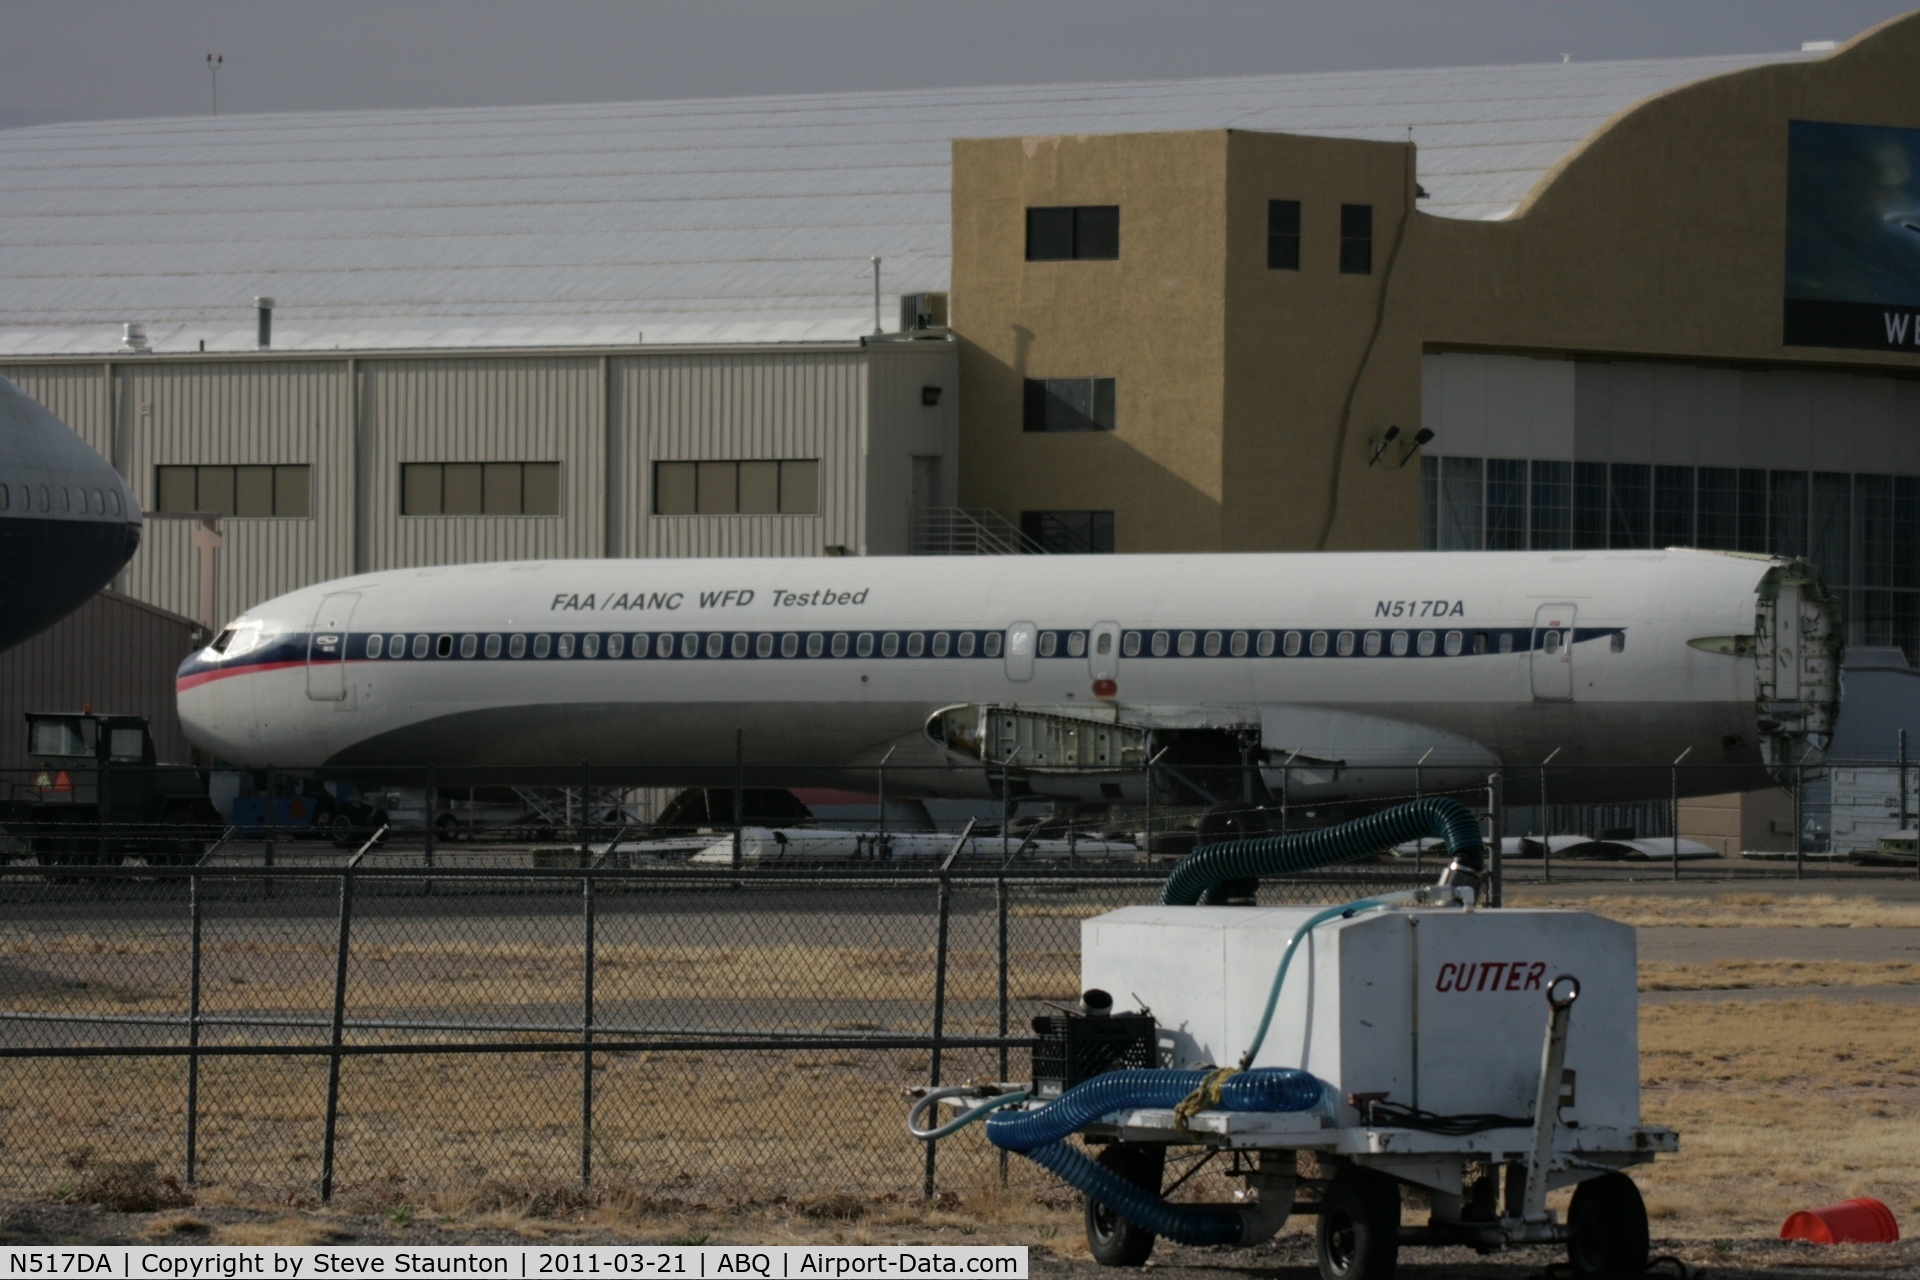 N517DA, 1978 Boeing 727-232 C/N 21433, Taken at Alburquerque International Sunport Airport, New Mexico in March 2011 whilst on an Aeroprint Aviation tour